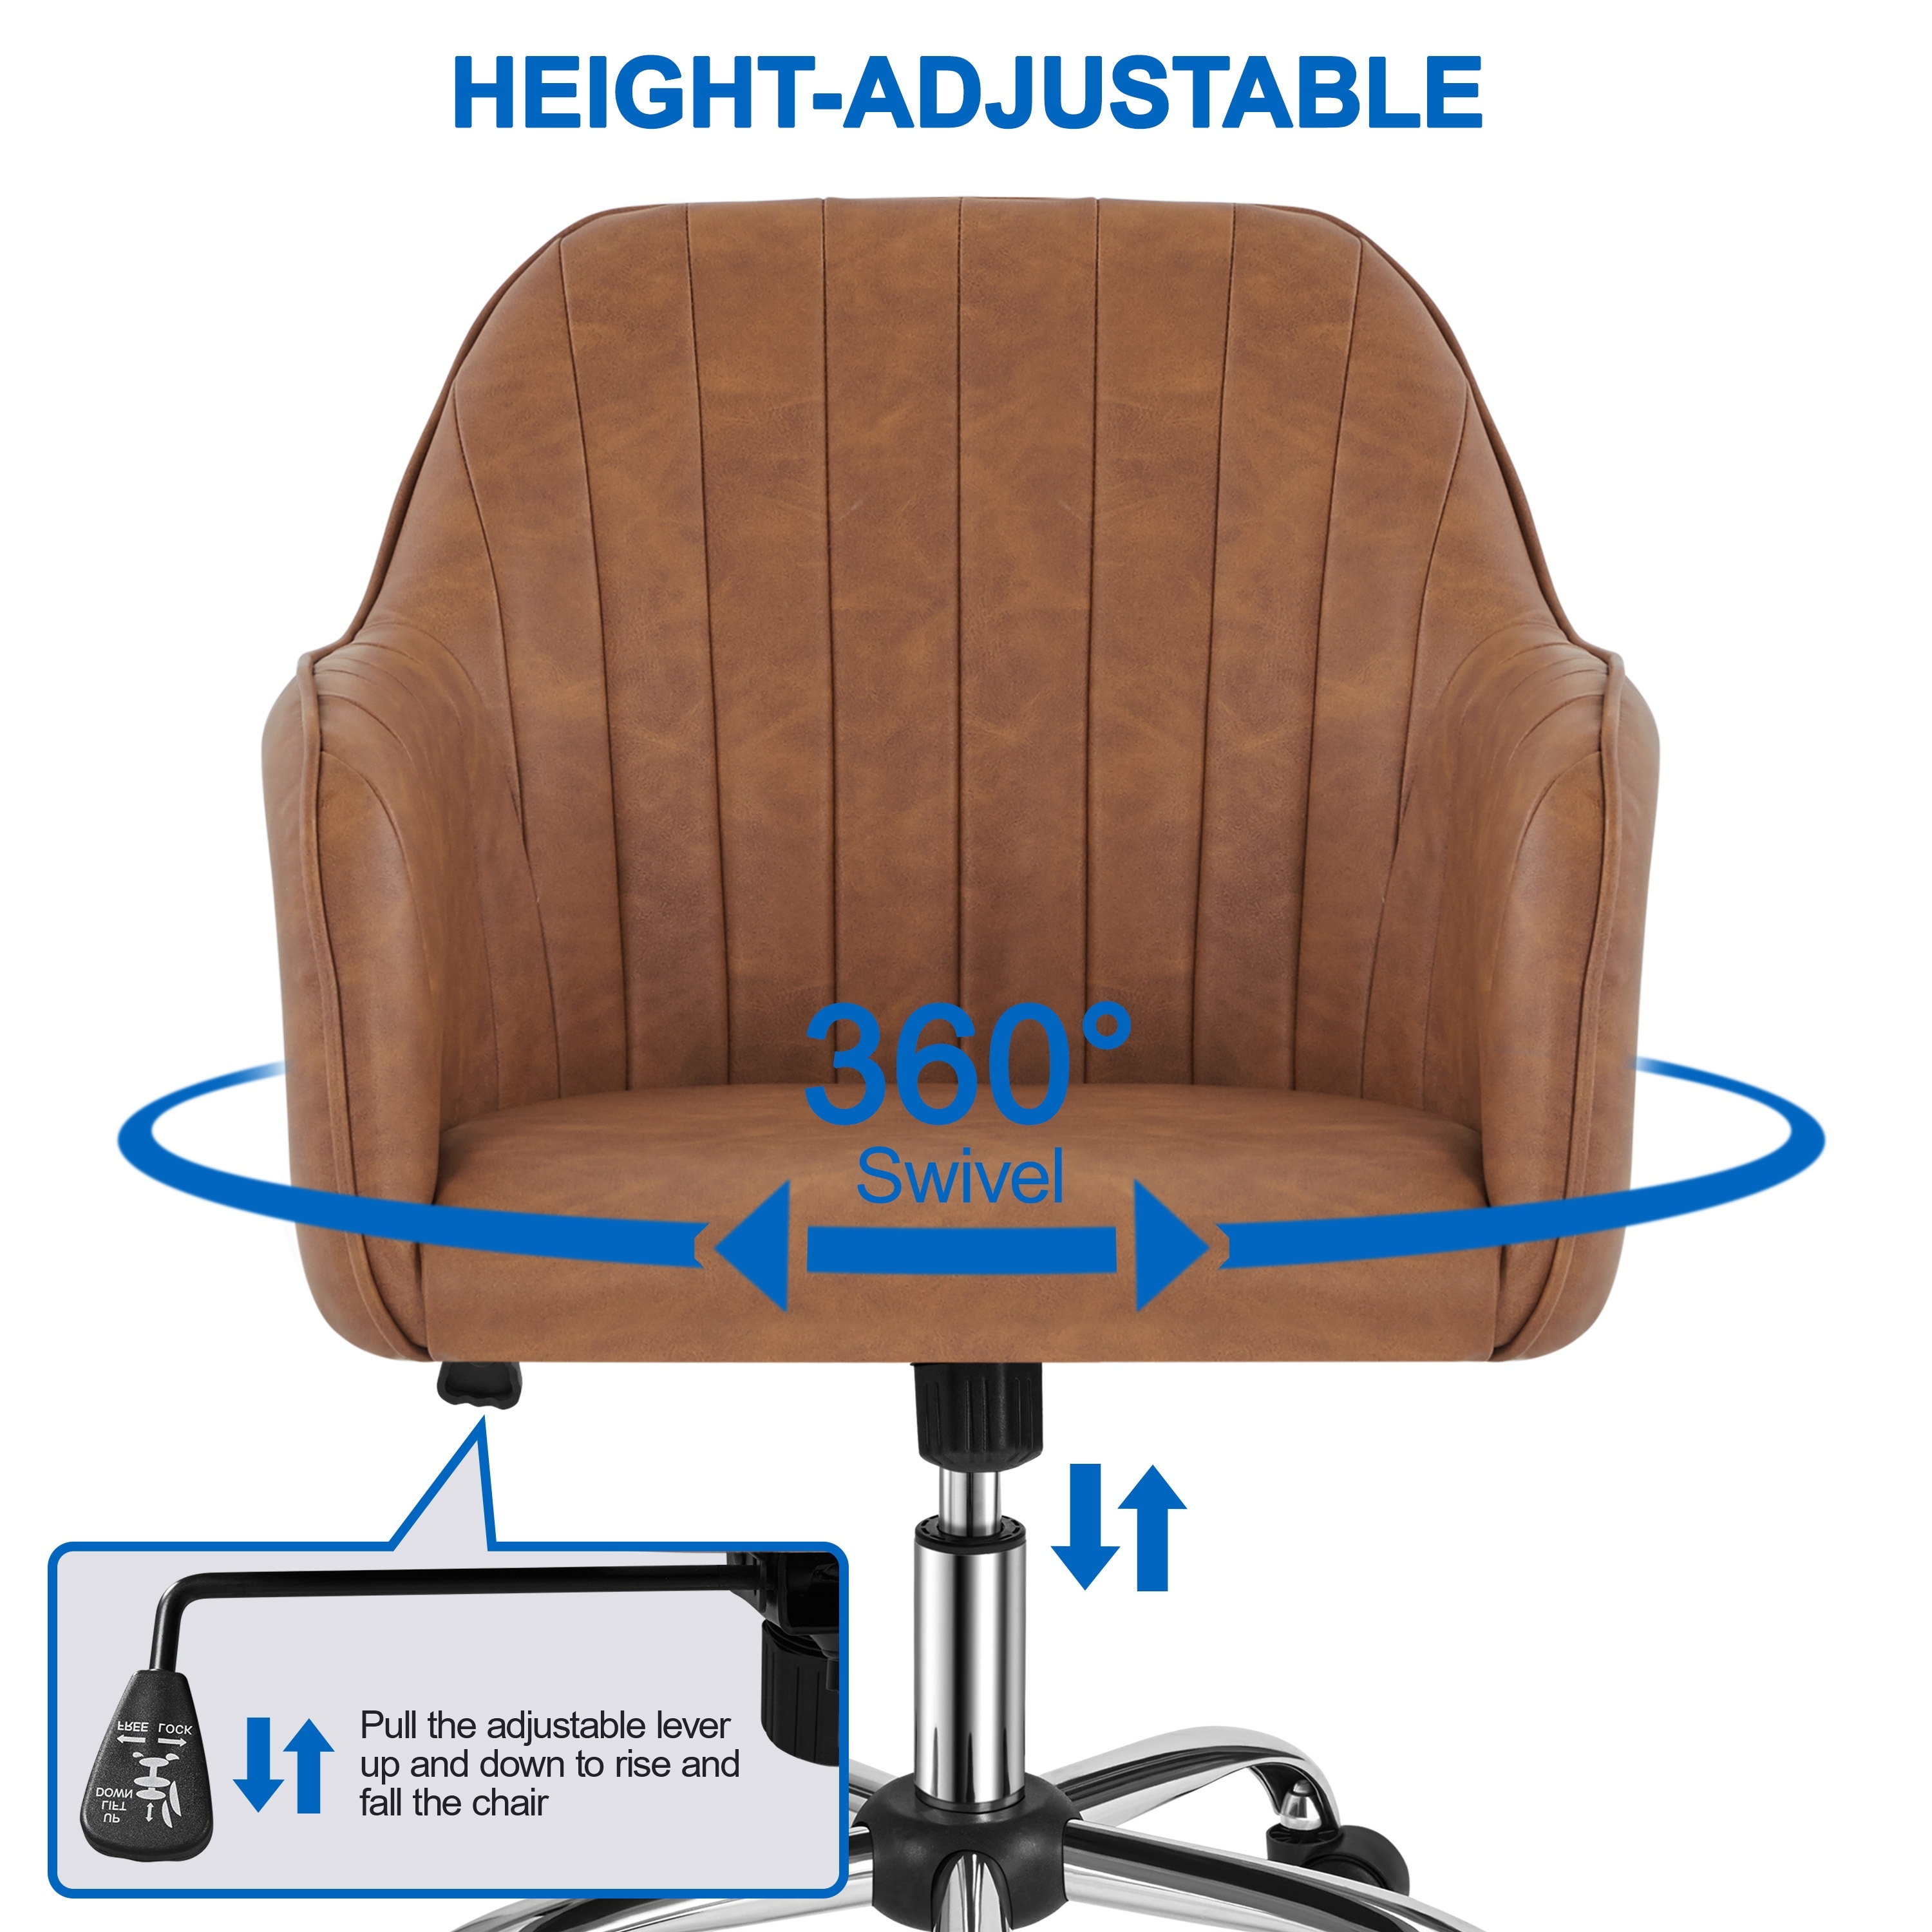 Yaheetech Modern Velvet Desk Chair Soft Height-adjustable 360